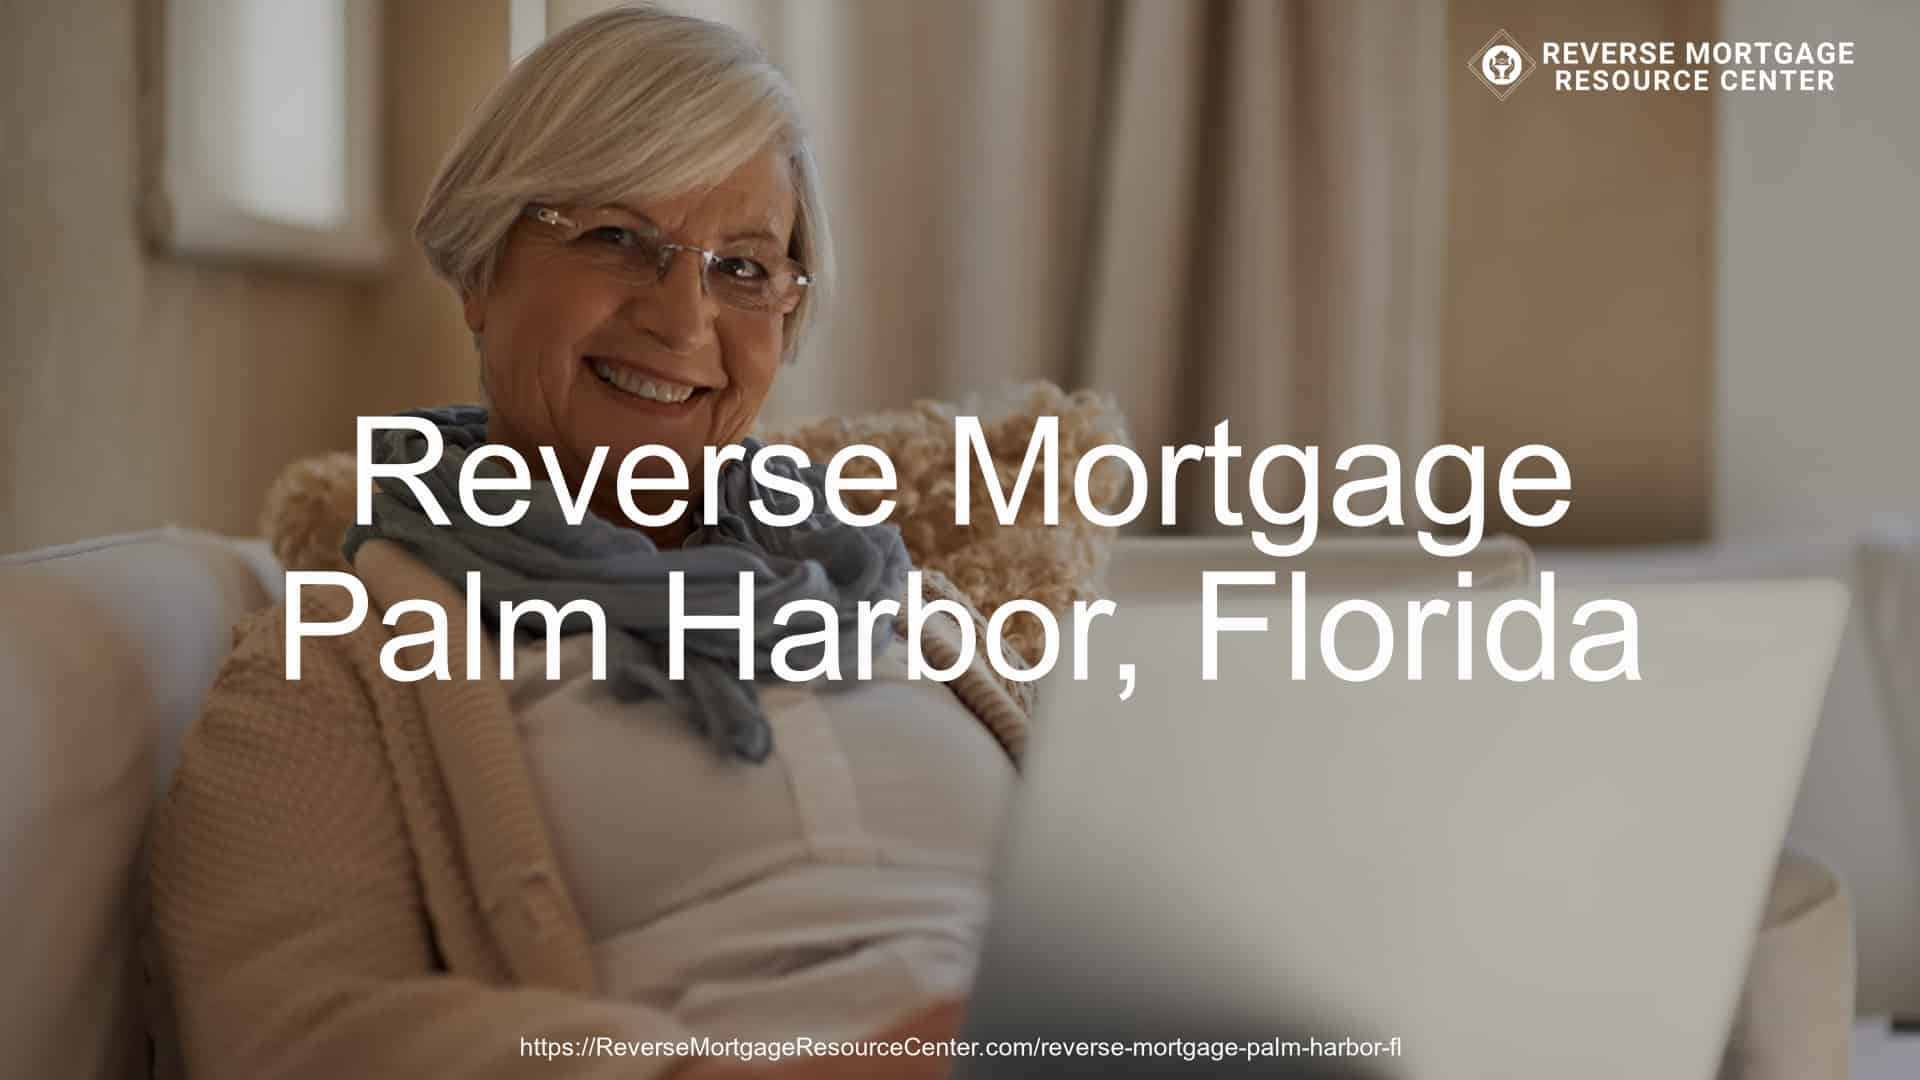 Reverse Mortgage in Palm Harbor, FL